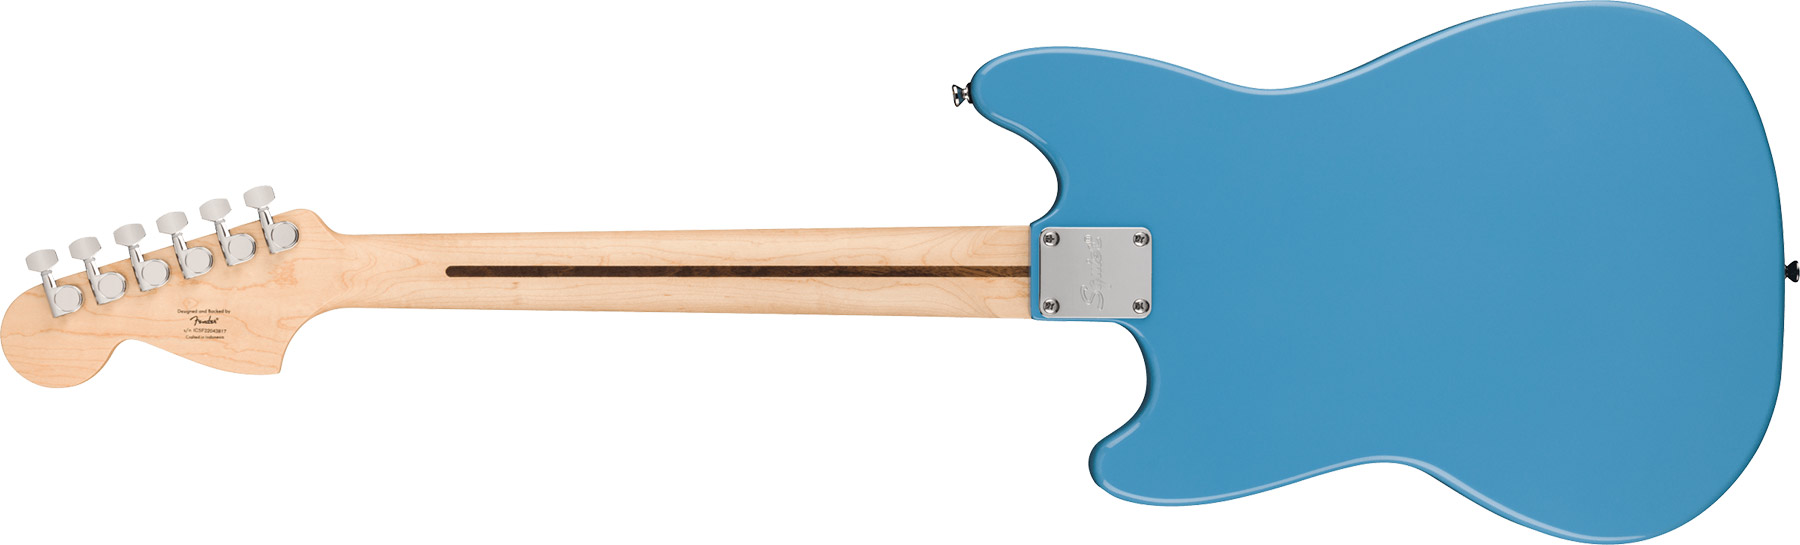 Squier Mustang Sonic Hh 2h Ht Lau - California Blue - Retro rock electric guitar - Variation 1